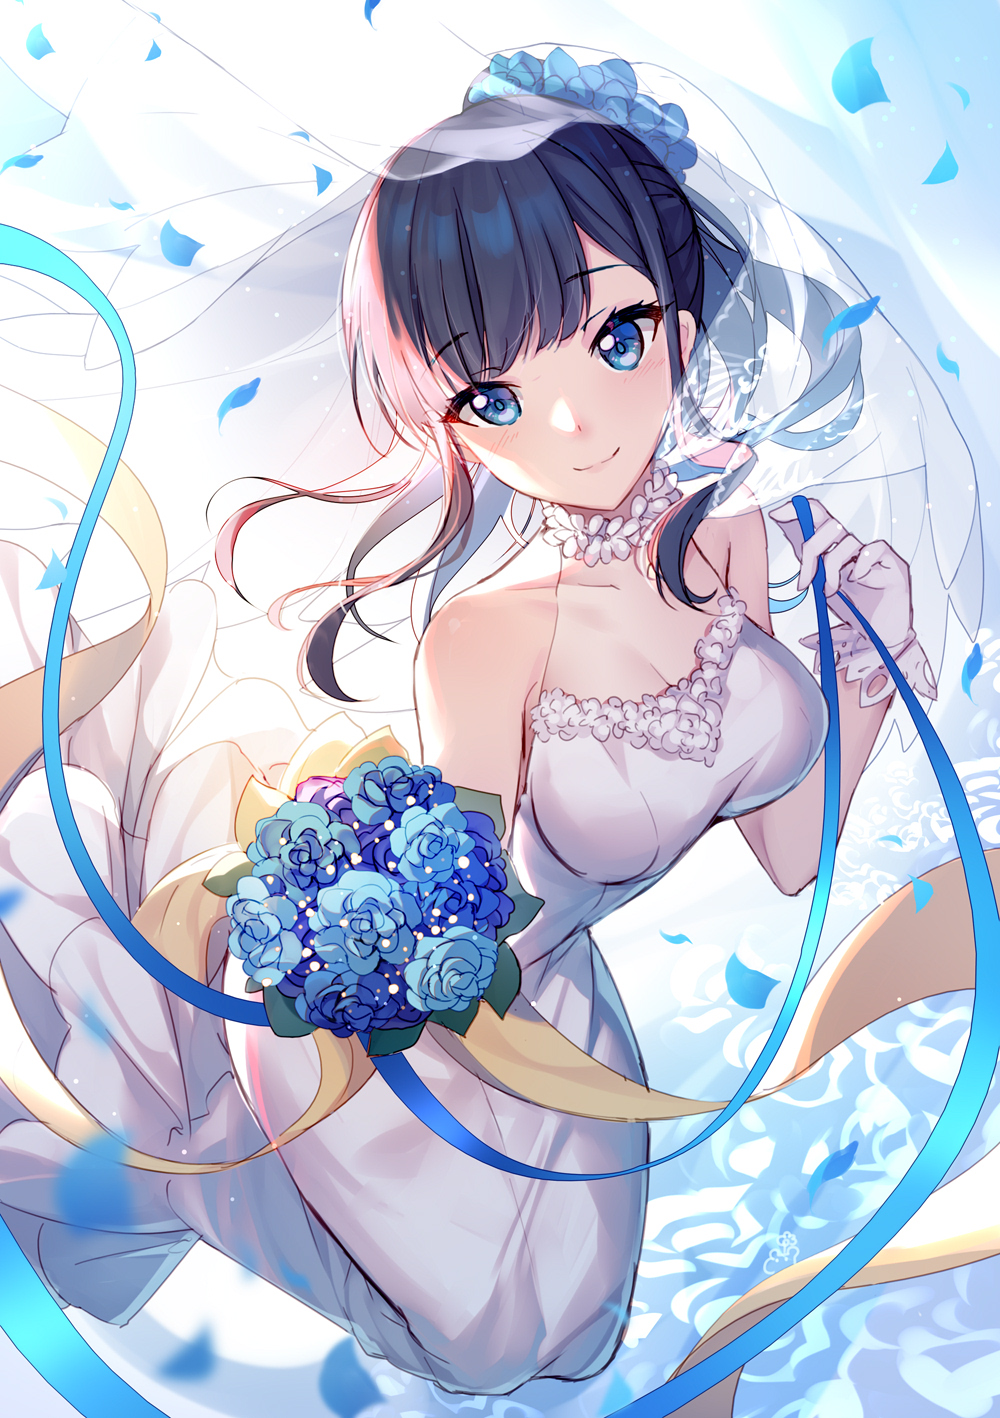 Anime 1000x1418 anime anime girls SSSS.GRIDMAN Takarada Rikka artwork bison cangshu wedding dress bridal veil dark hair blue eyes smiling